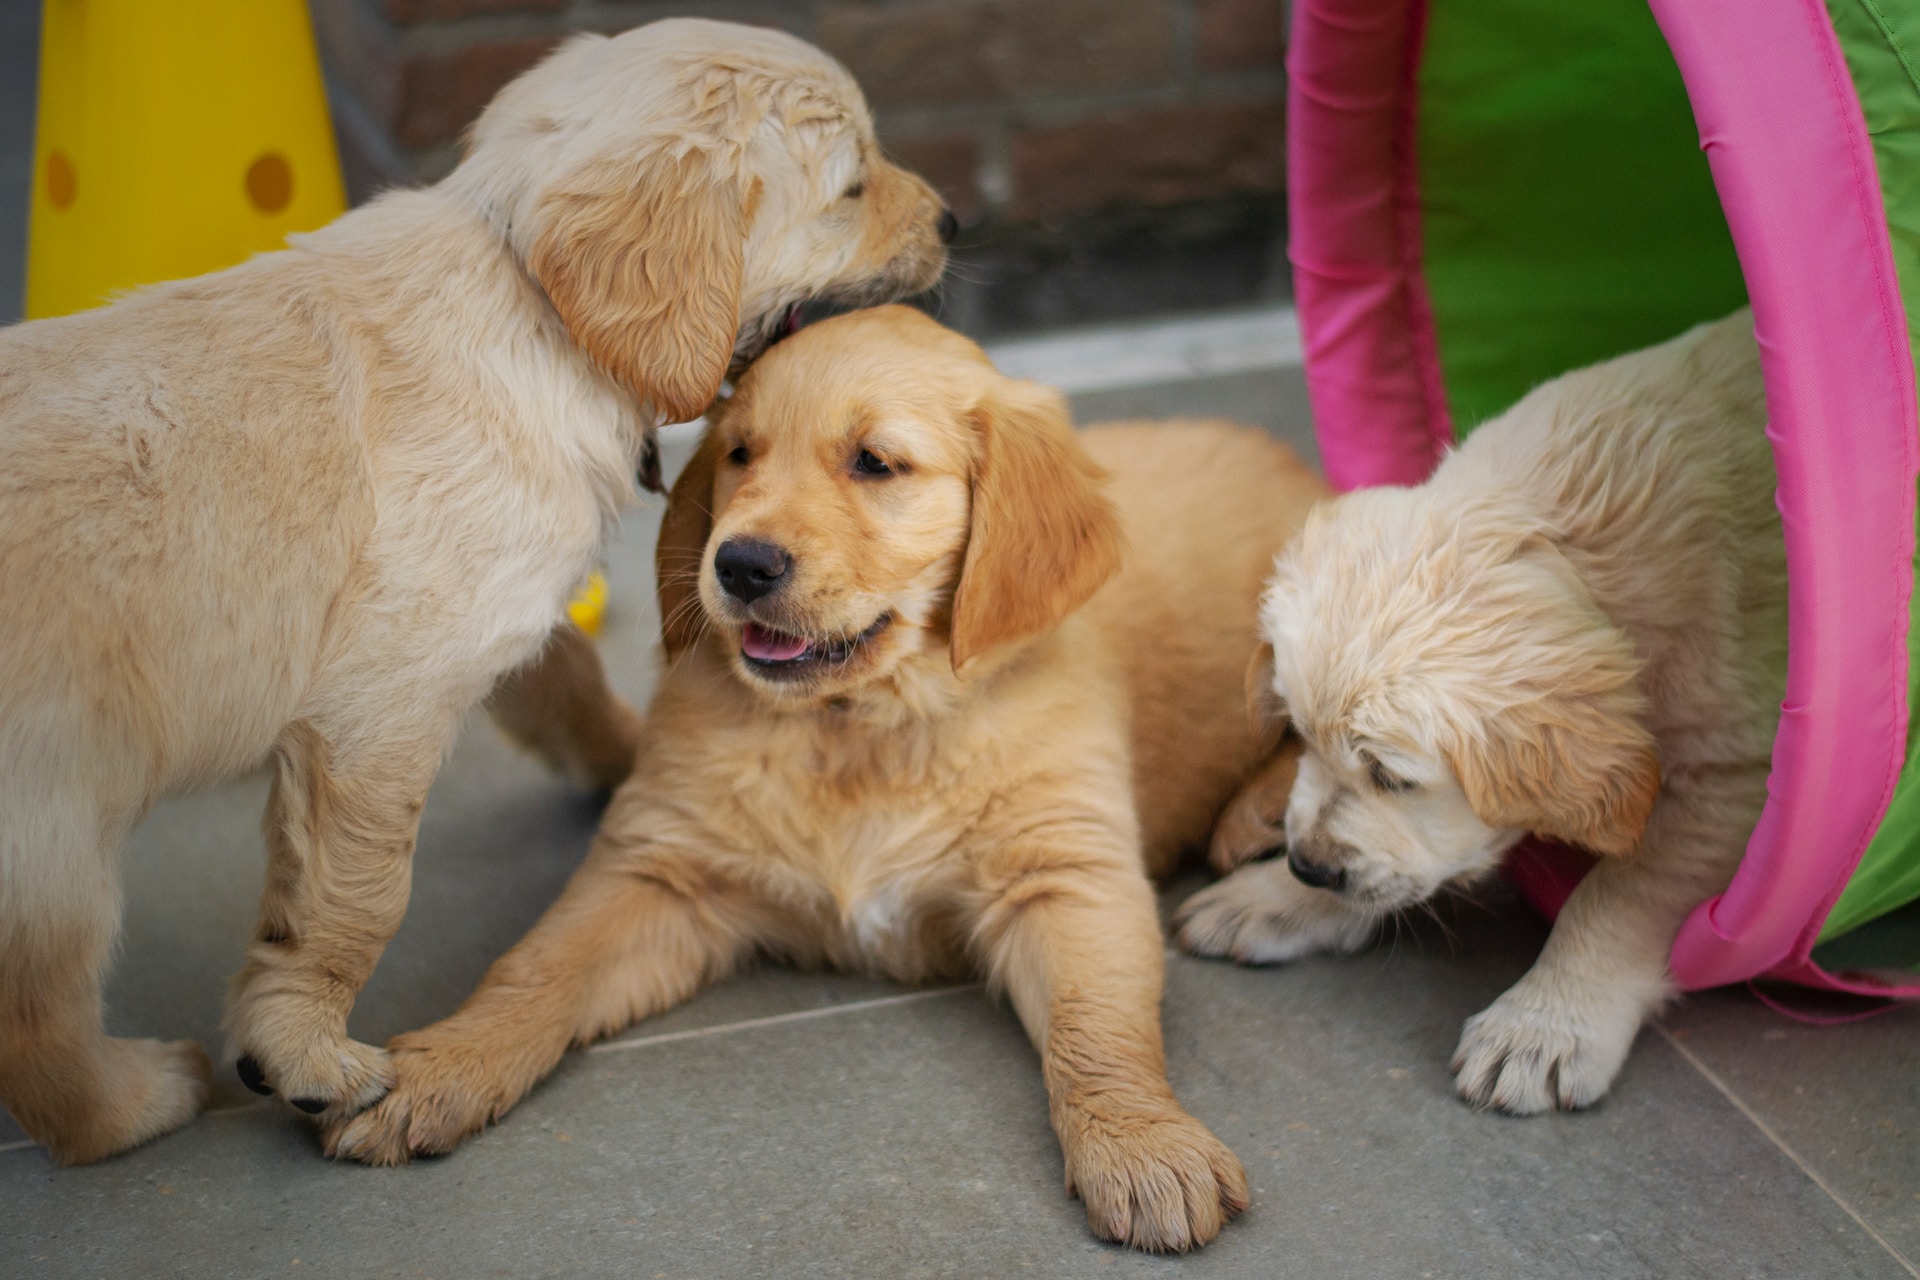 When Do Puppies Calm Down?